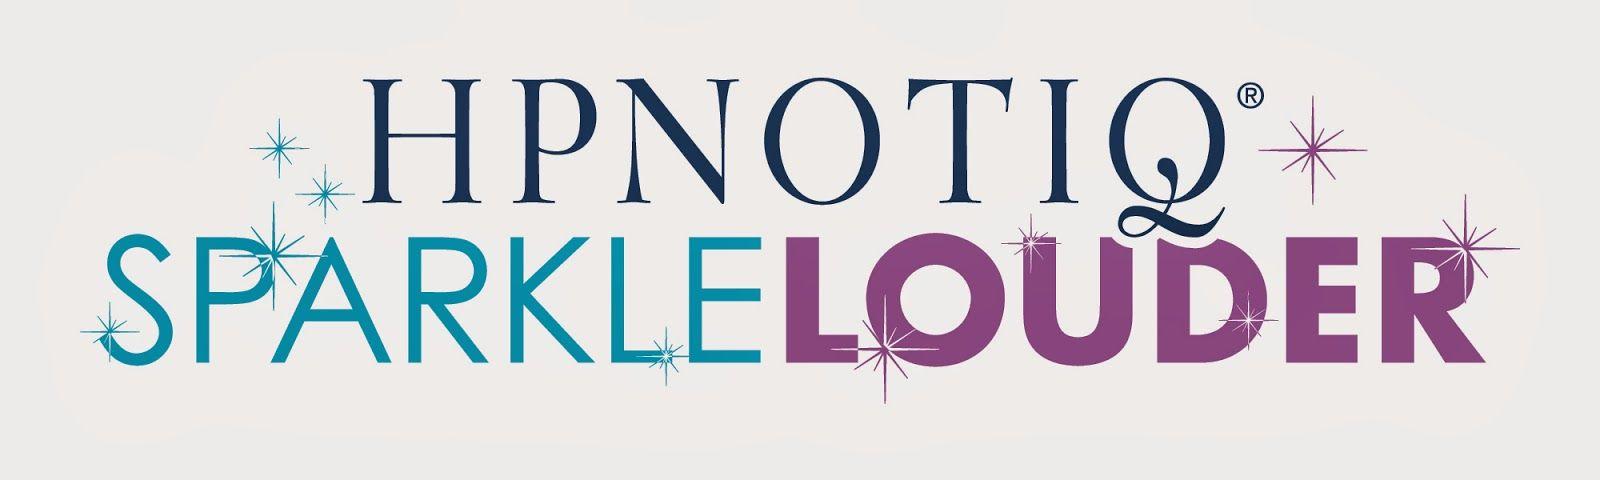 Hpnotiq Logo - Sarah & Helene #SparkleLouder // Win with Hpnotiq